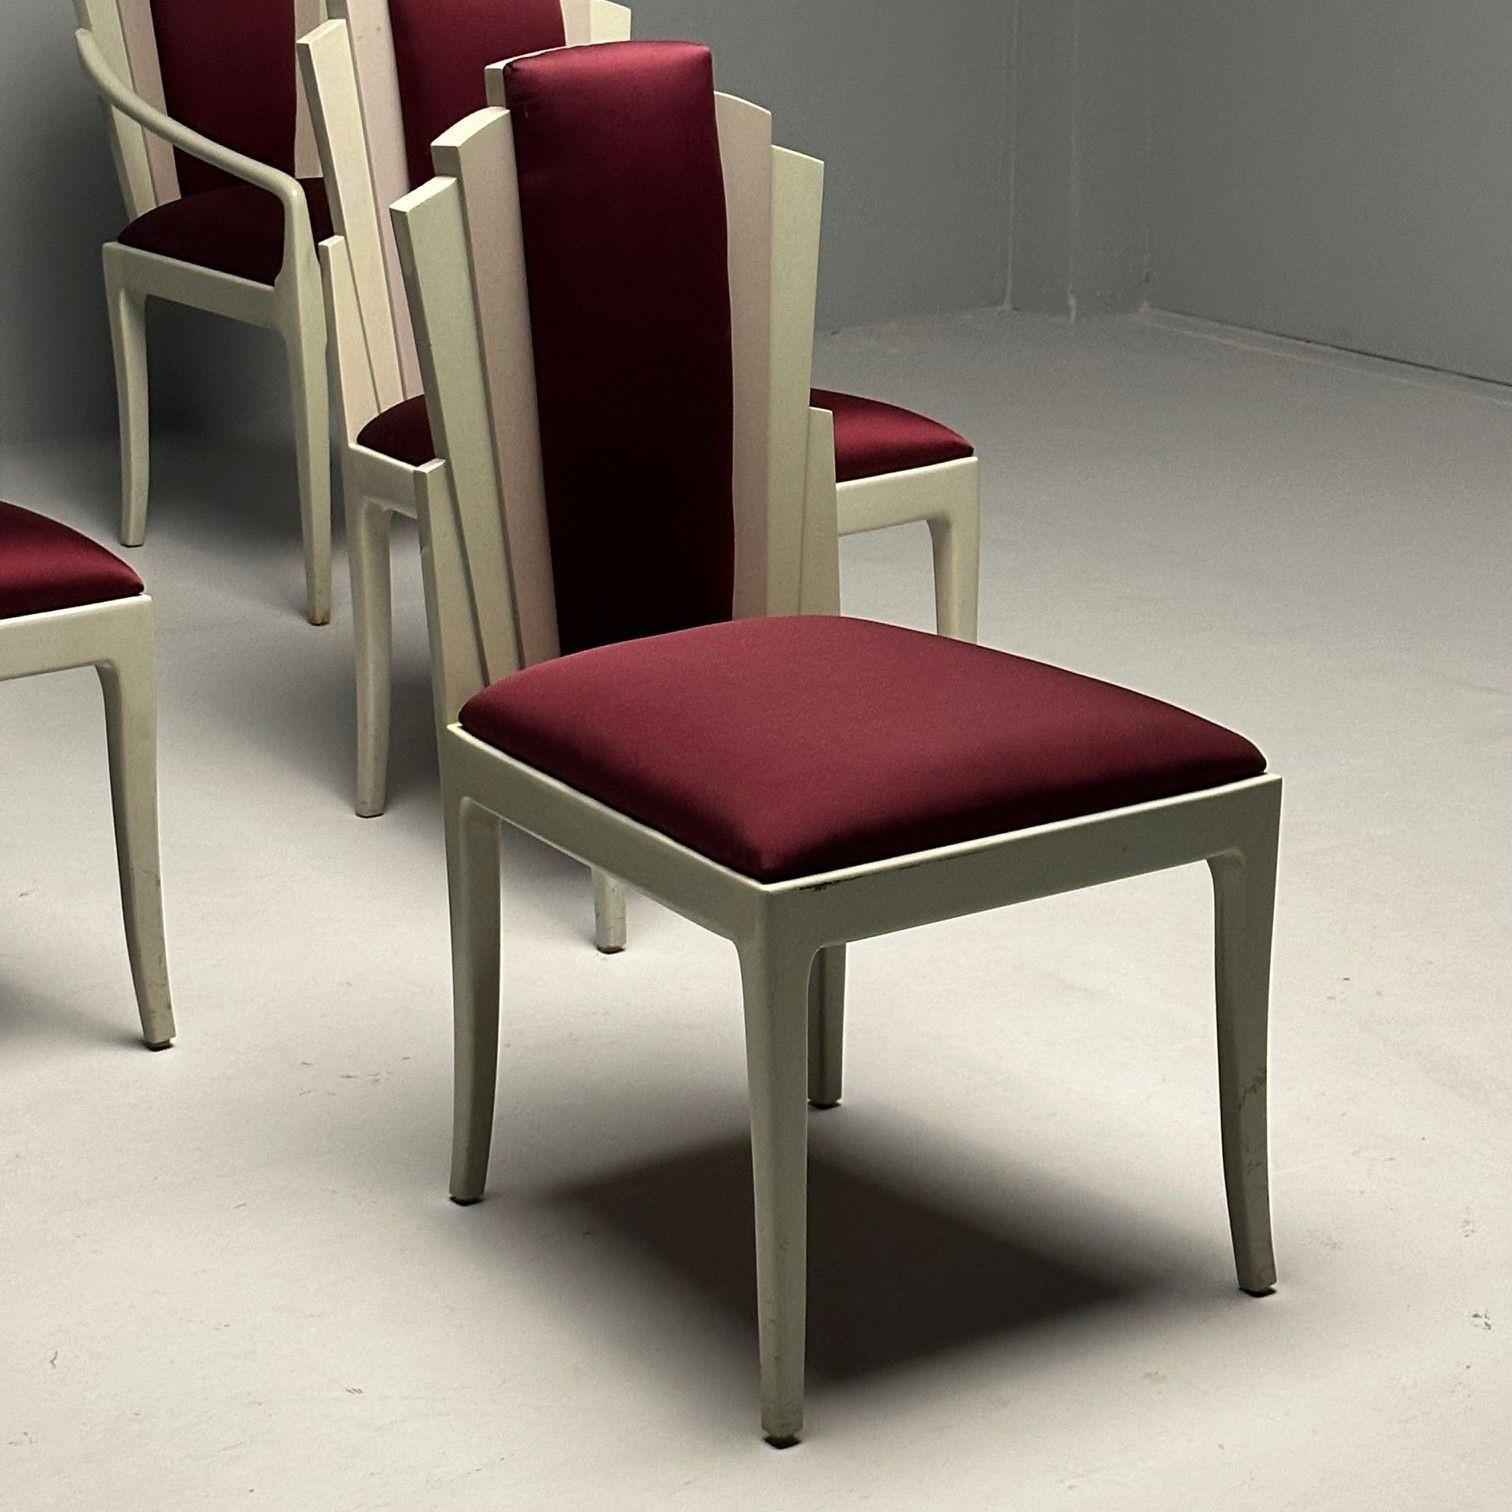 Mid-20th Century Vladimir Kagan Mid-Century Modern, Six Eva Dining Chairs, Lacquer, Maroon Fabric For Sale